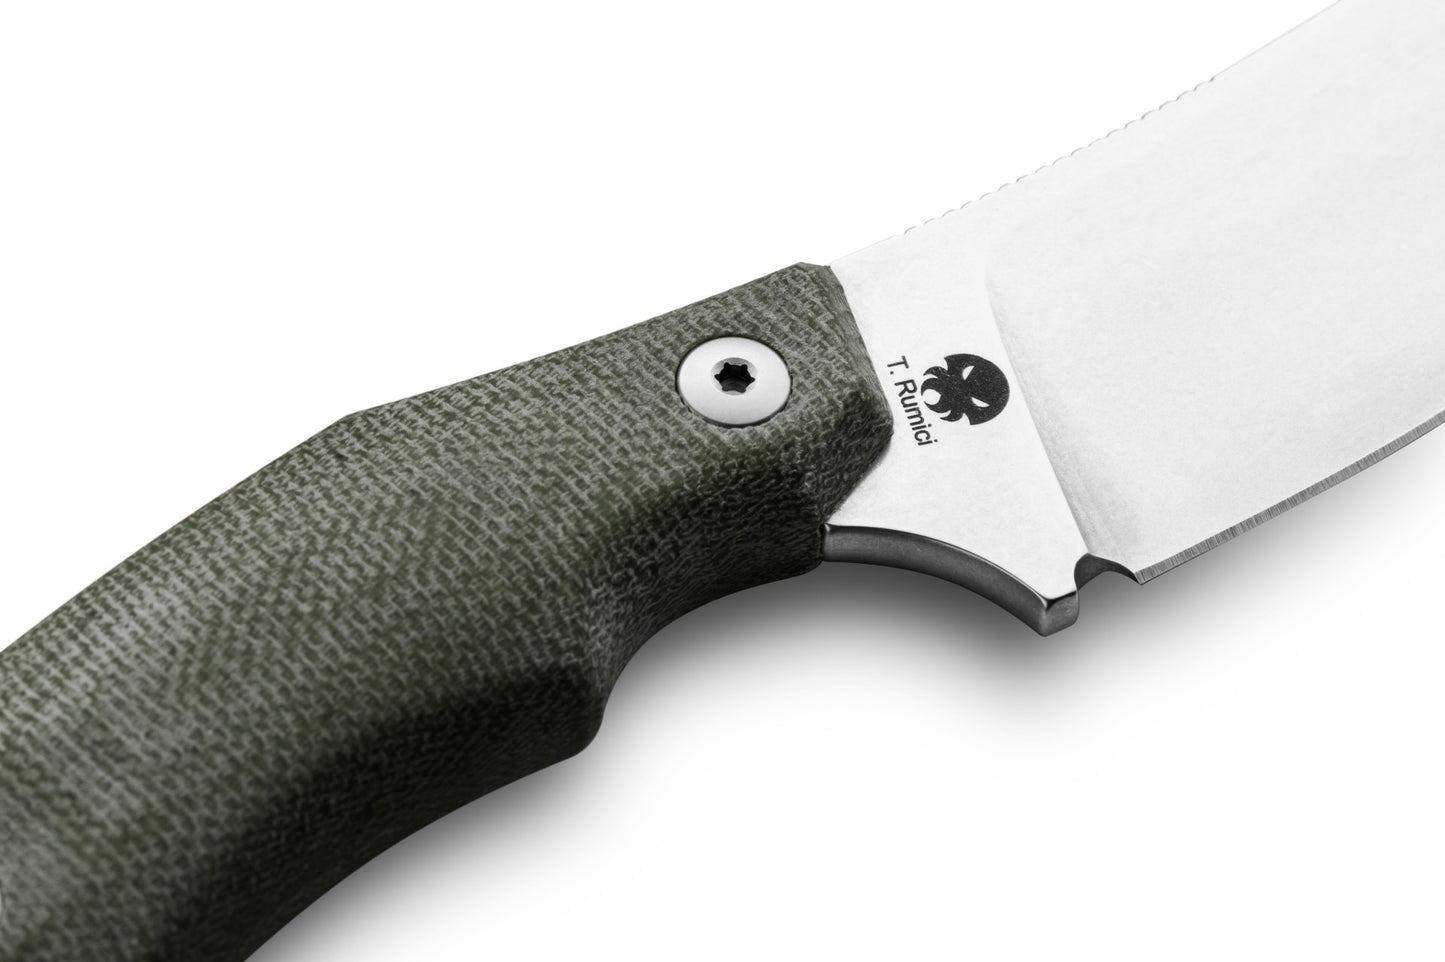 LionSteel H1 2.95" M390 Green Canvas Micarta Fixed Blade Knife